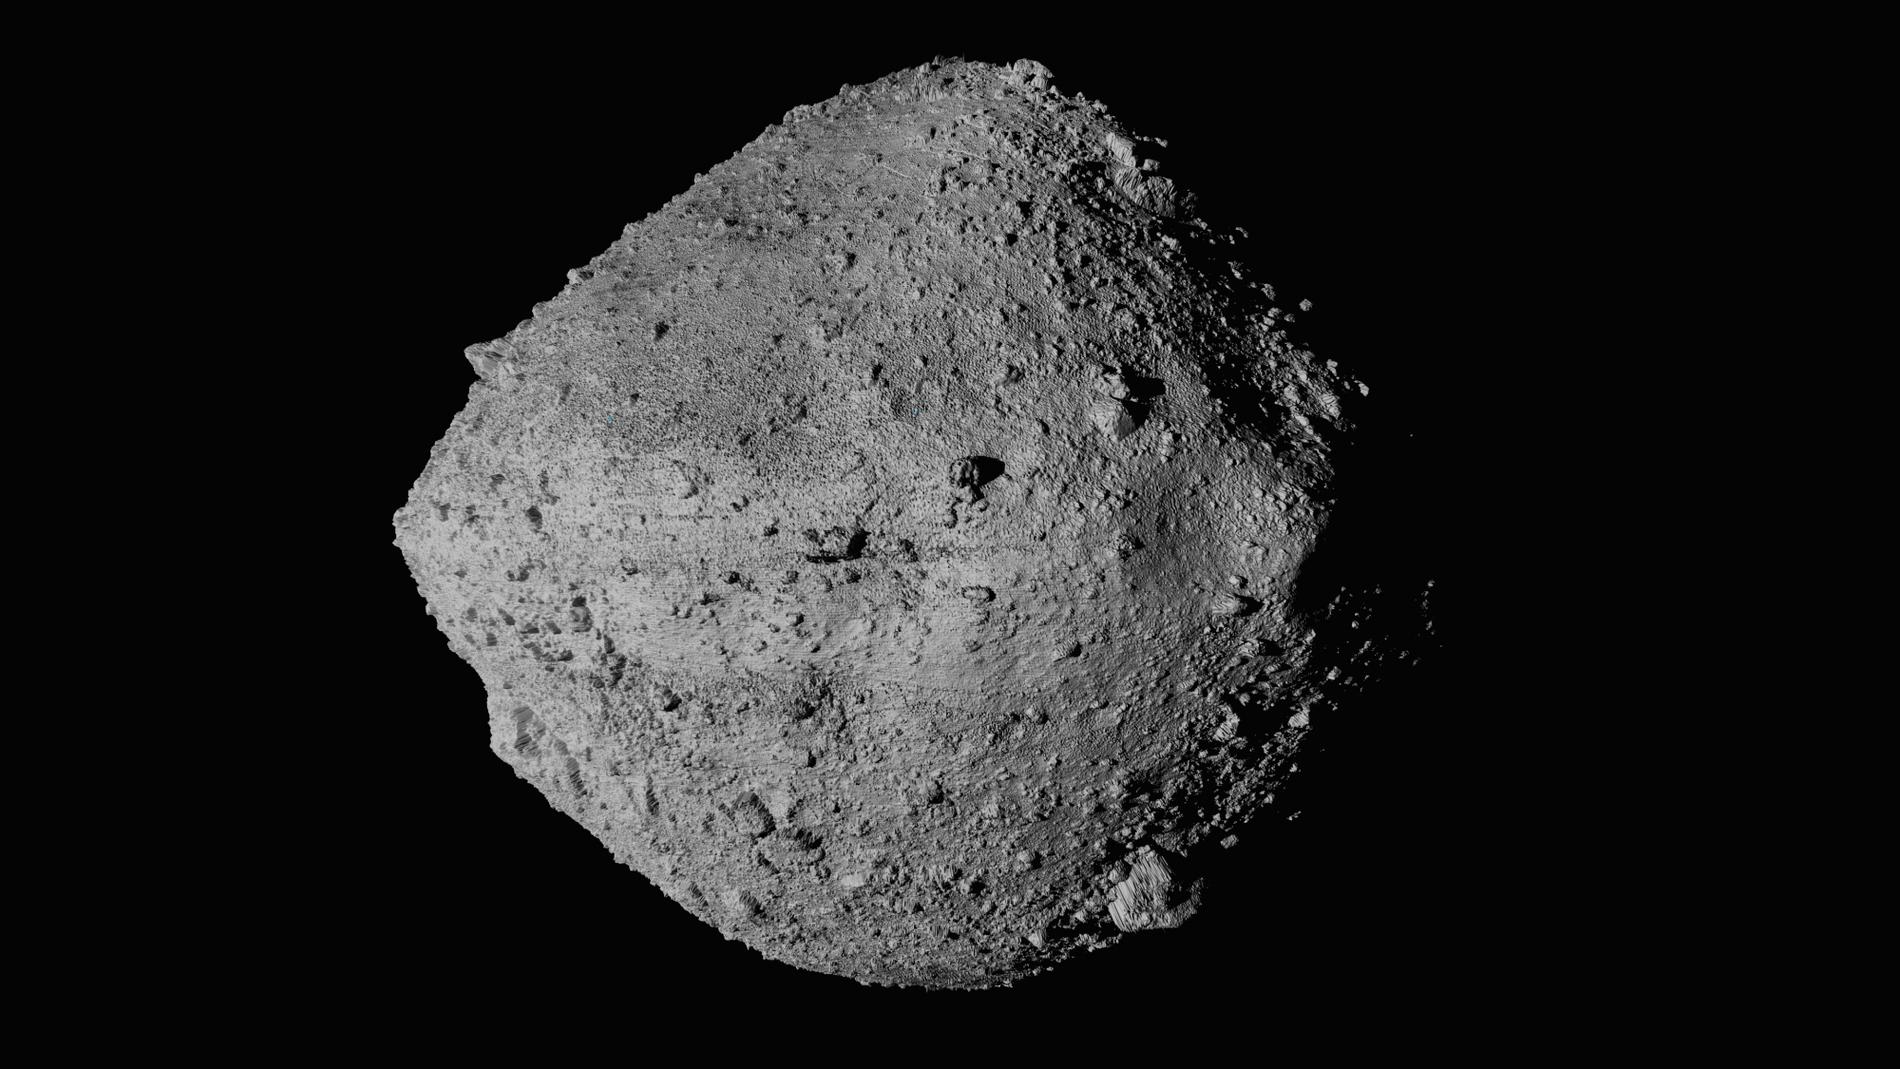 Asteroiden Bennu är lika stor som Empire state building.